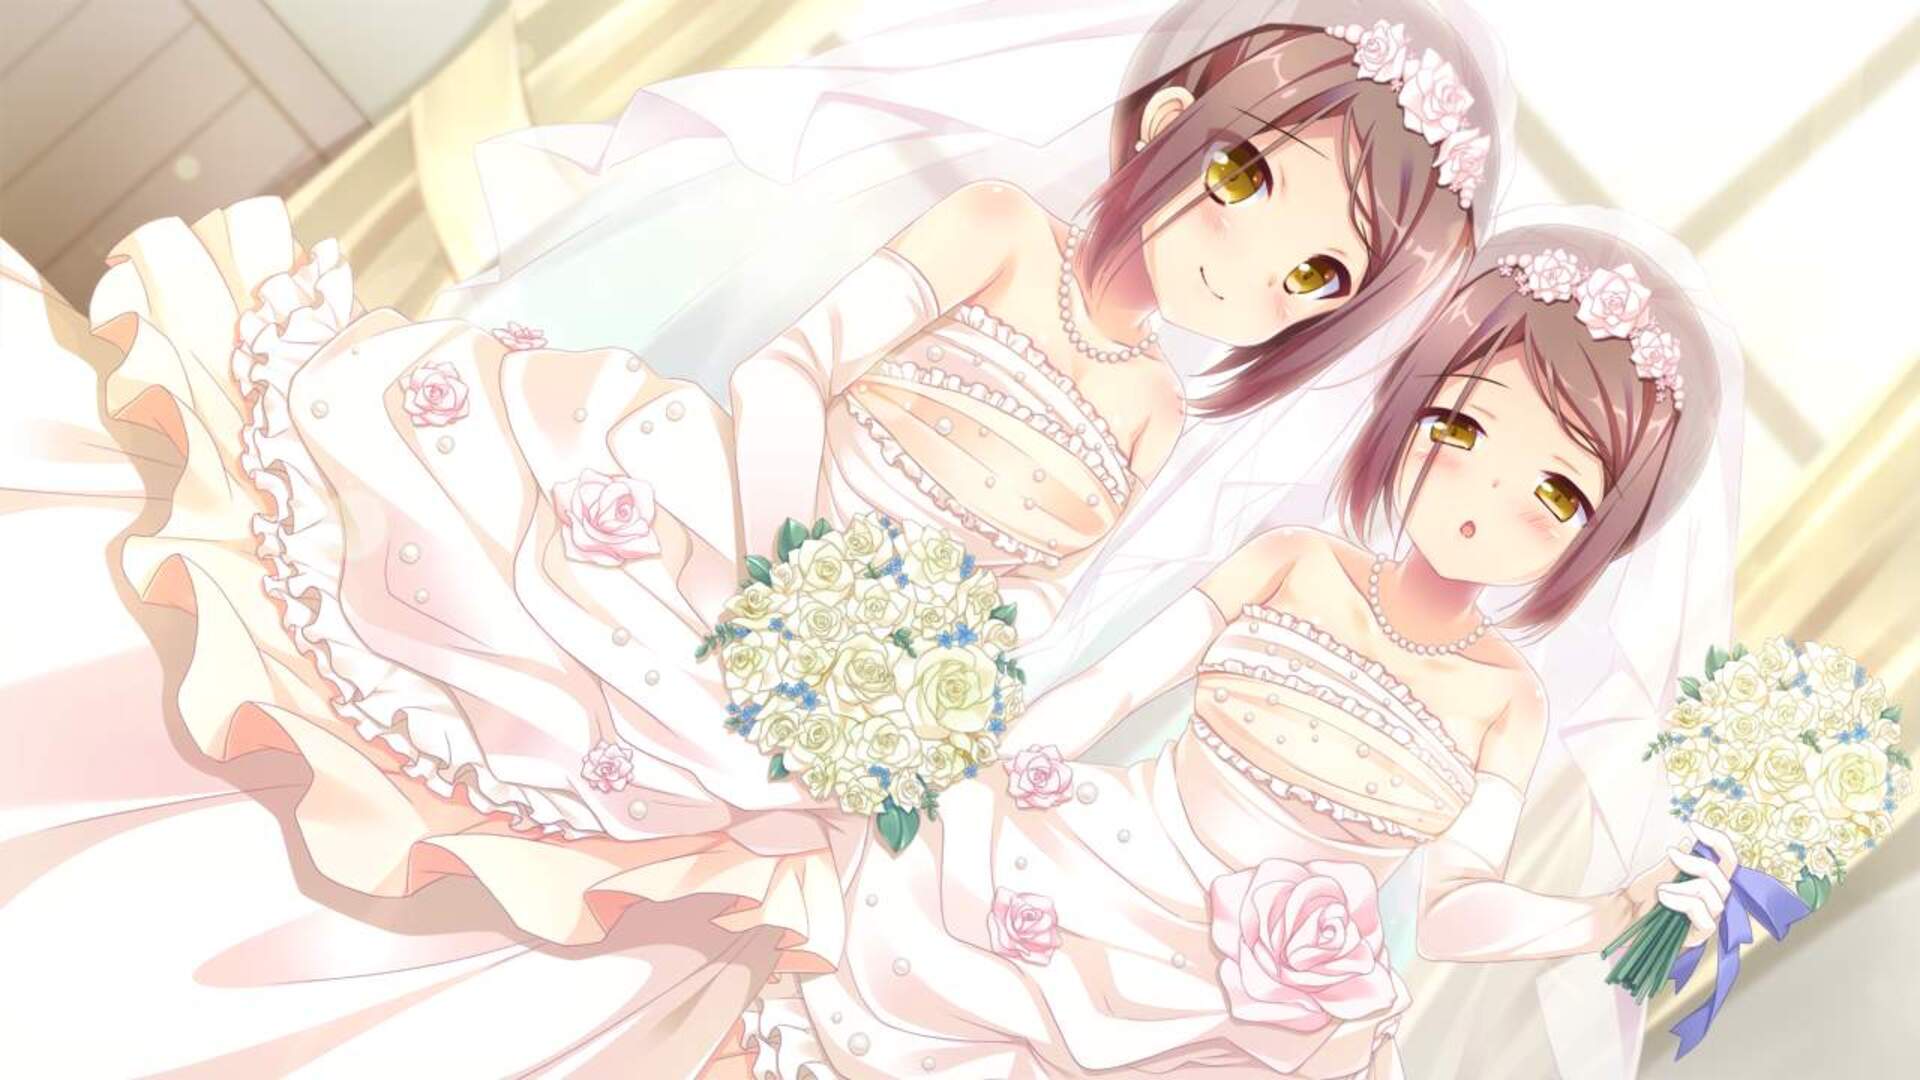 Anime Anime Girls Game CG Twins Original Characters Artwork Digital Art Fan Art Wedding Dress Bridal 1920x1080